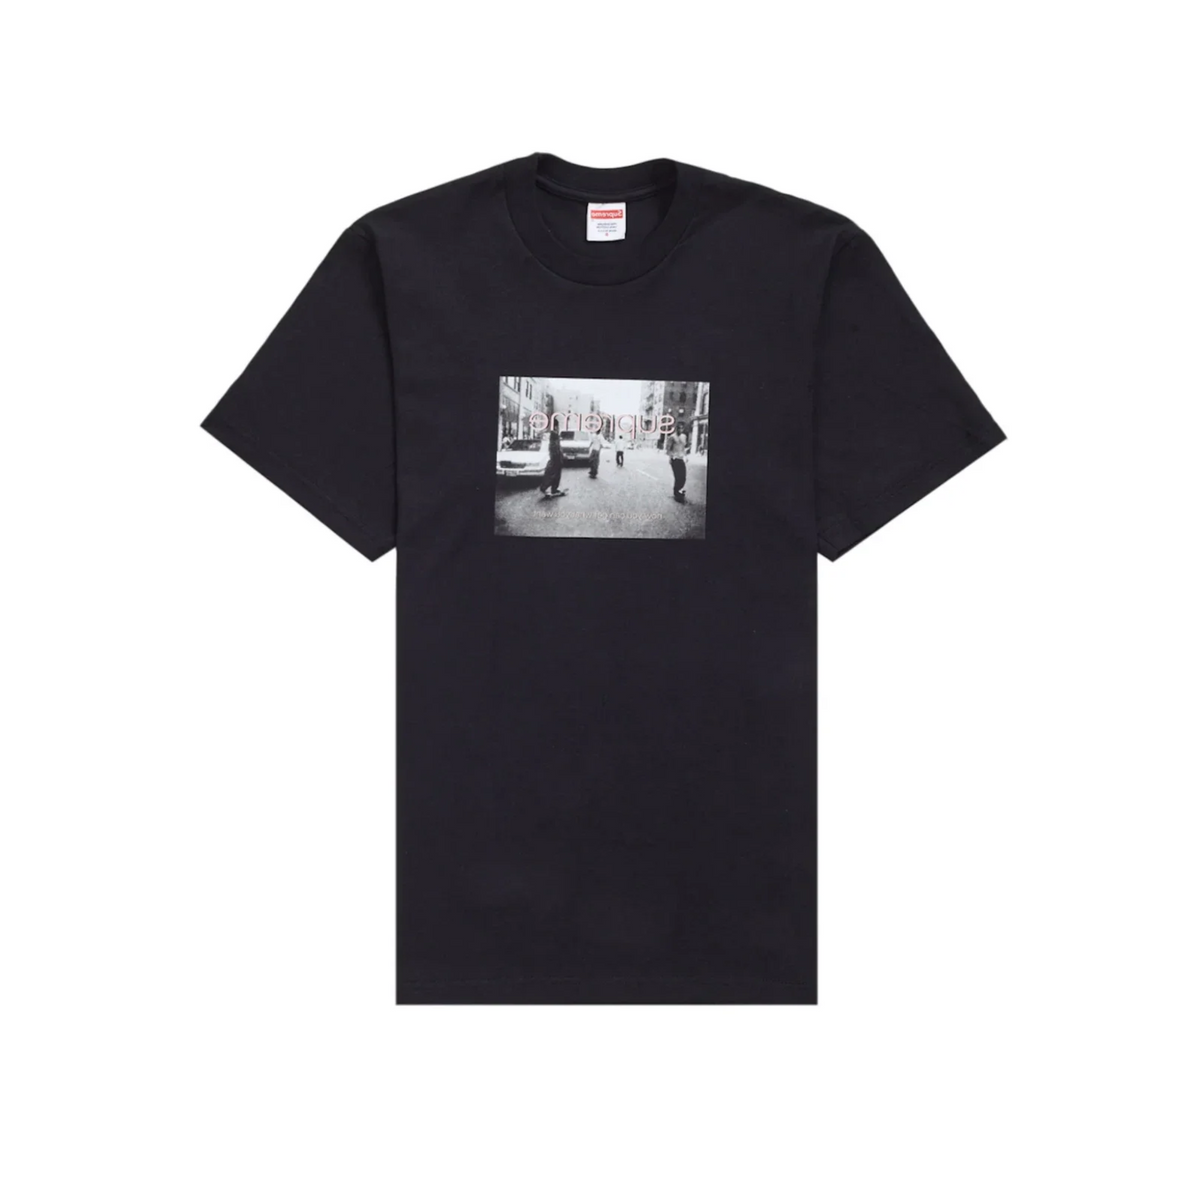 Supreme Crew 96 T-shirt "Black"